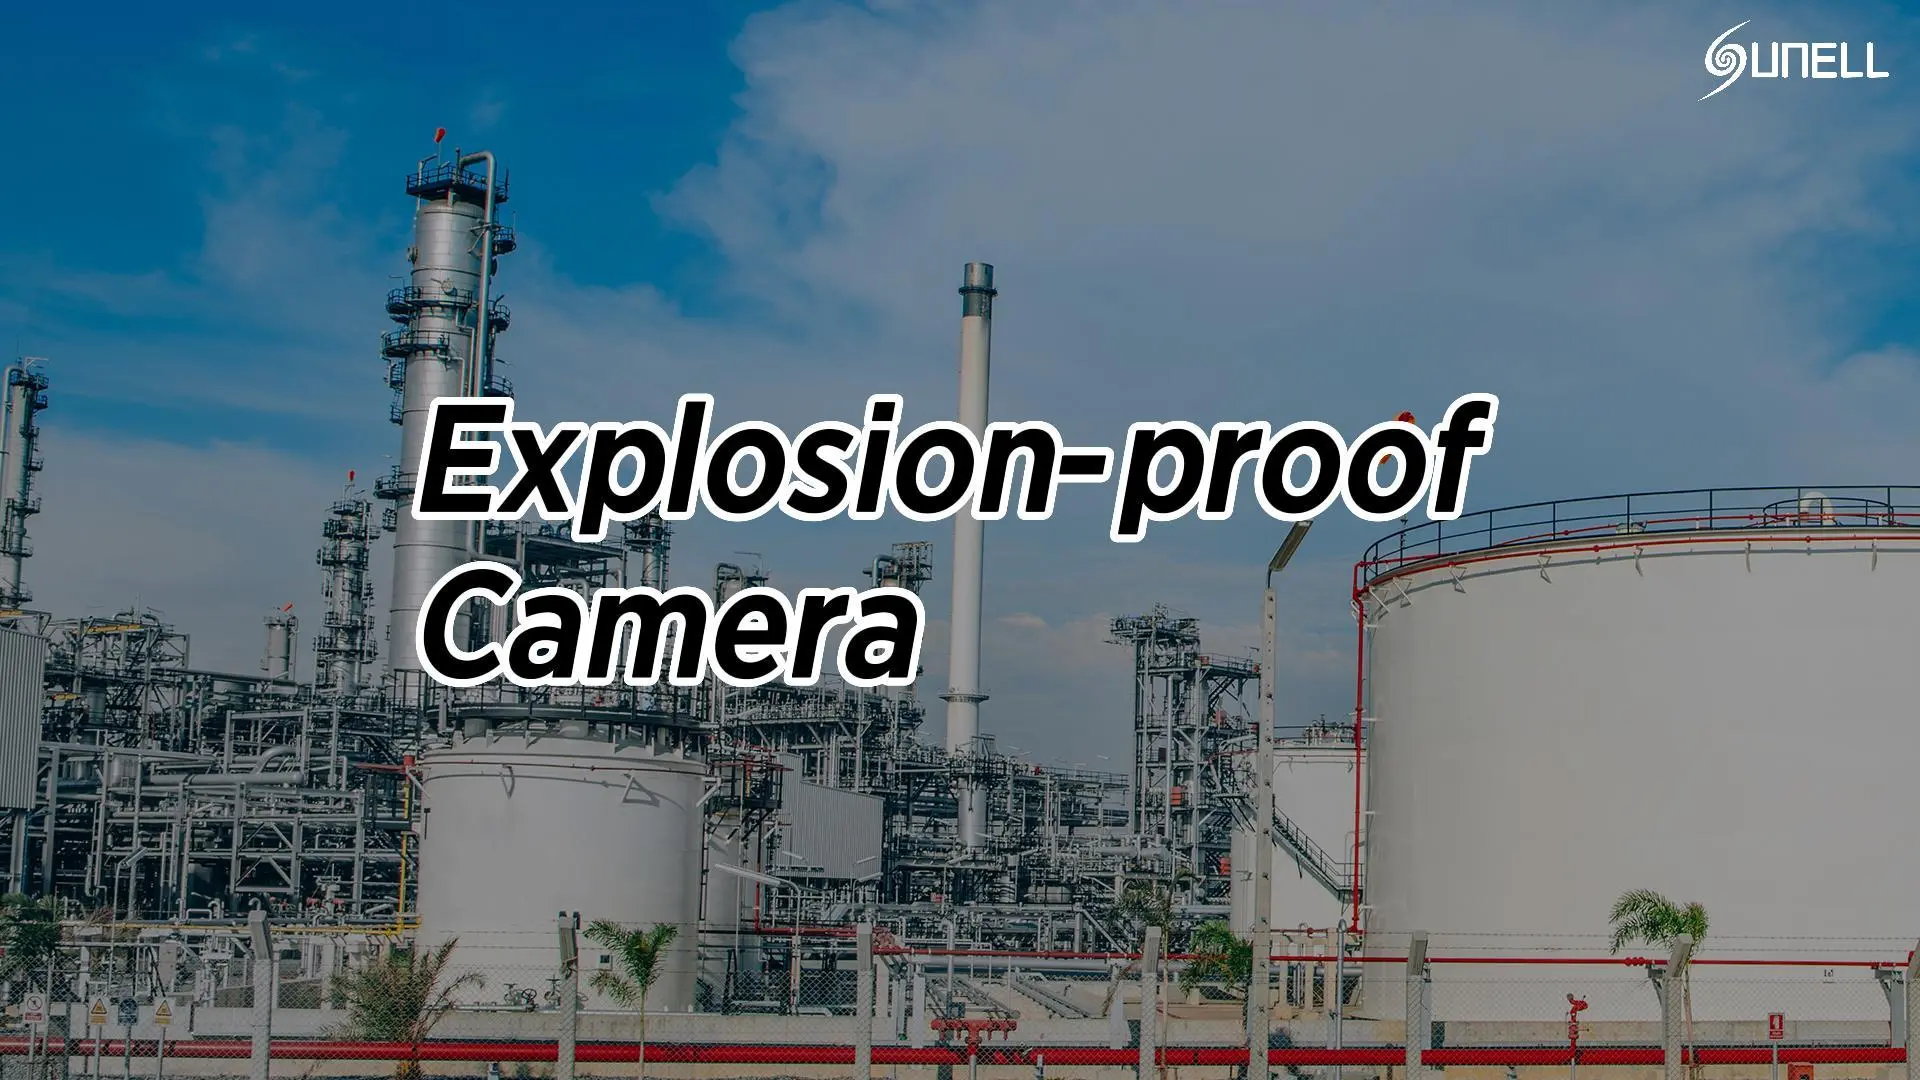 Introducing Sunell Explosion-proof Cameras - 翻译中...